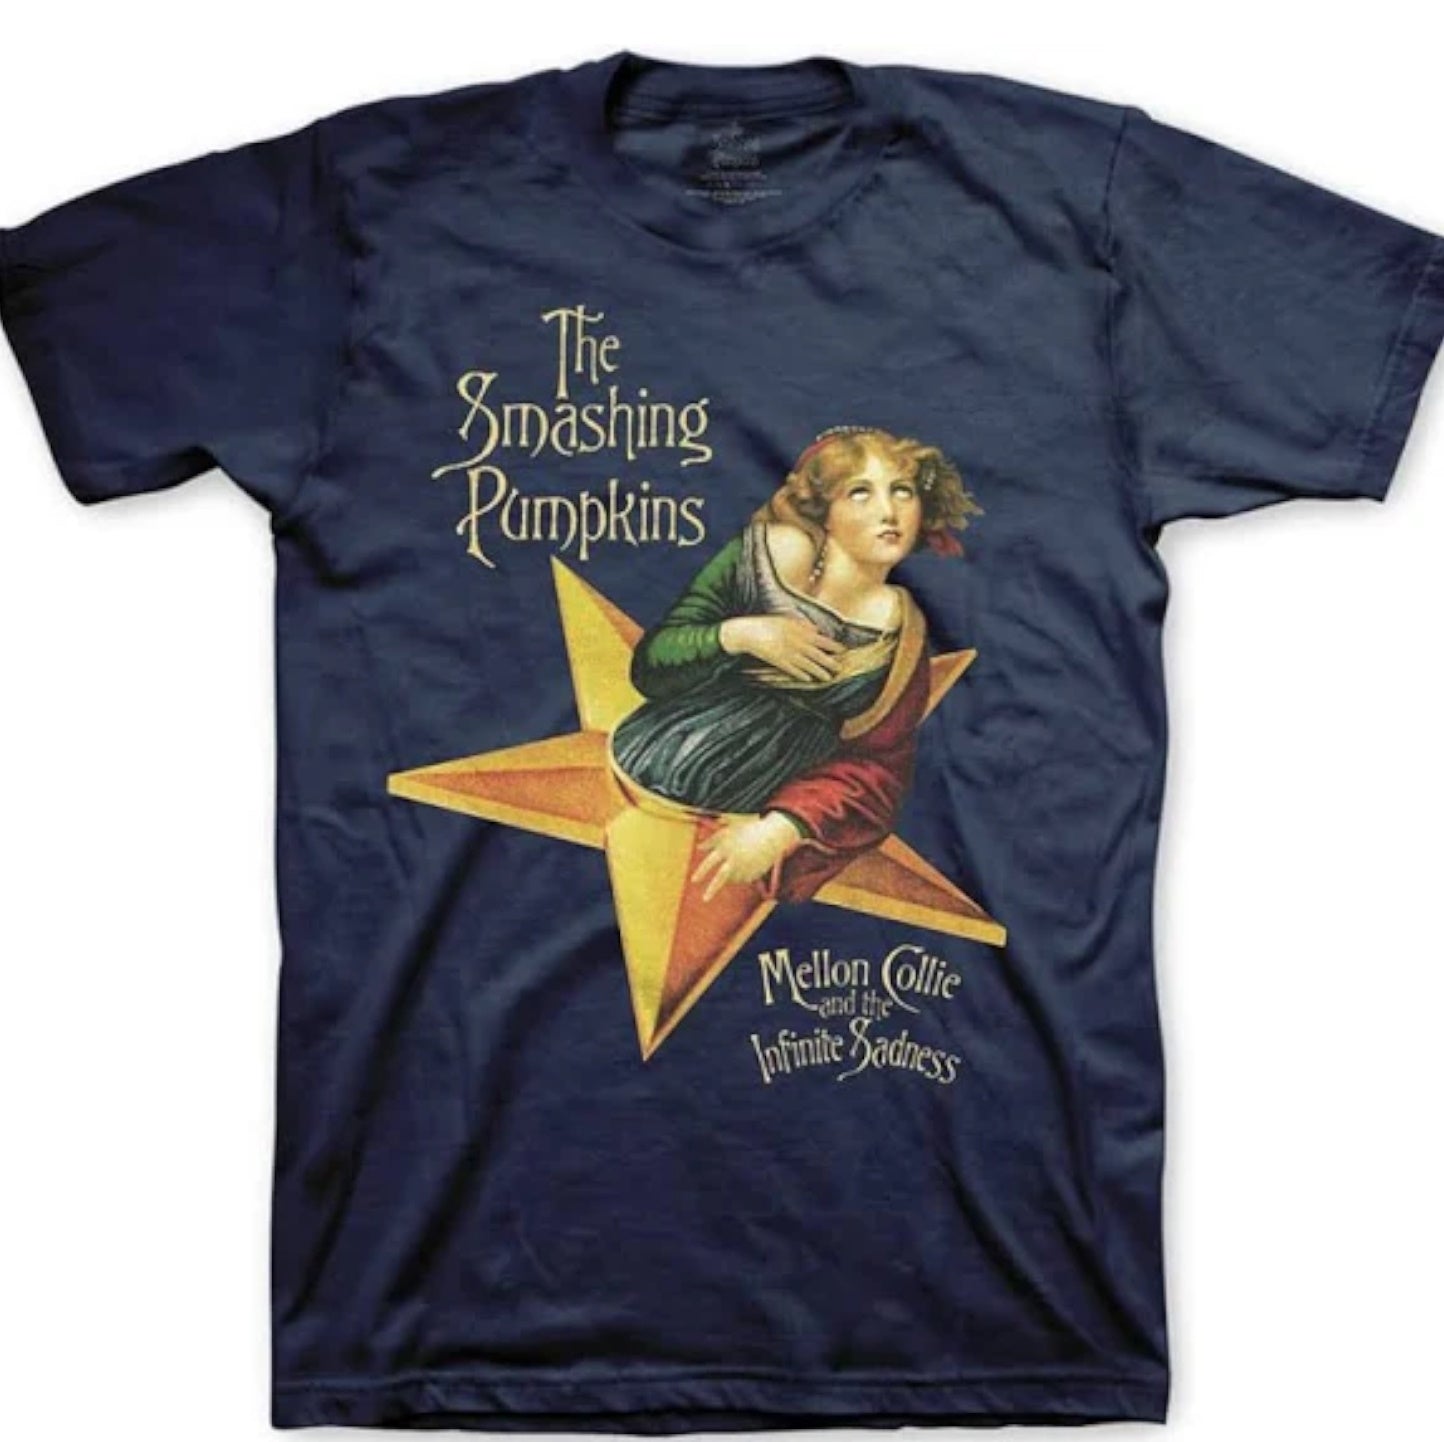 Smashing Pumpkins Gish Mens T-shirt Officially Licensed